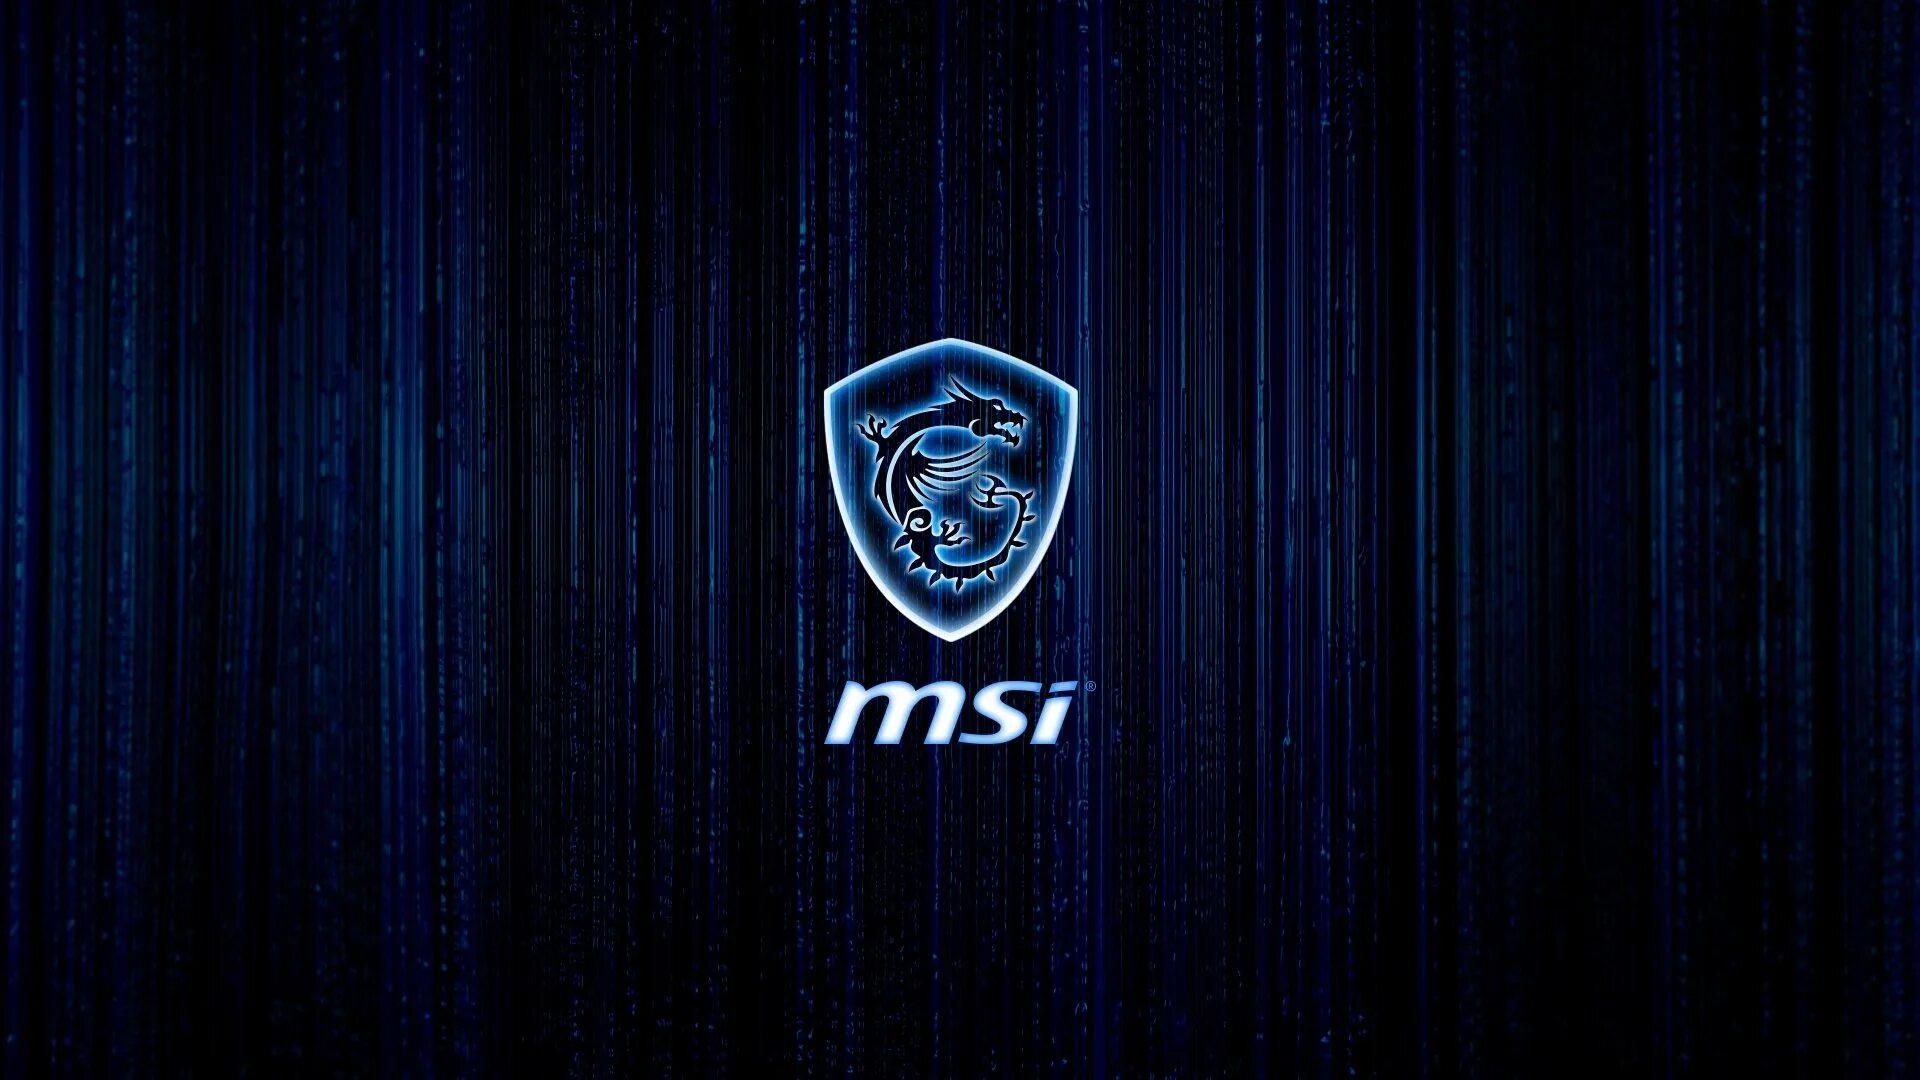 Msi 1920x1080. MSI 4к. Обои MSI 4k MSI. MSI logo 4k. MSI Wallpaper 4k.